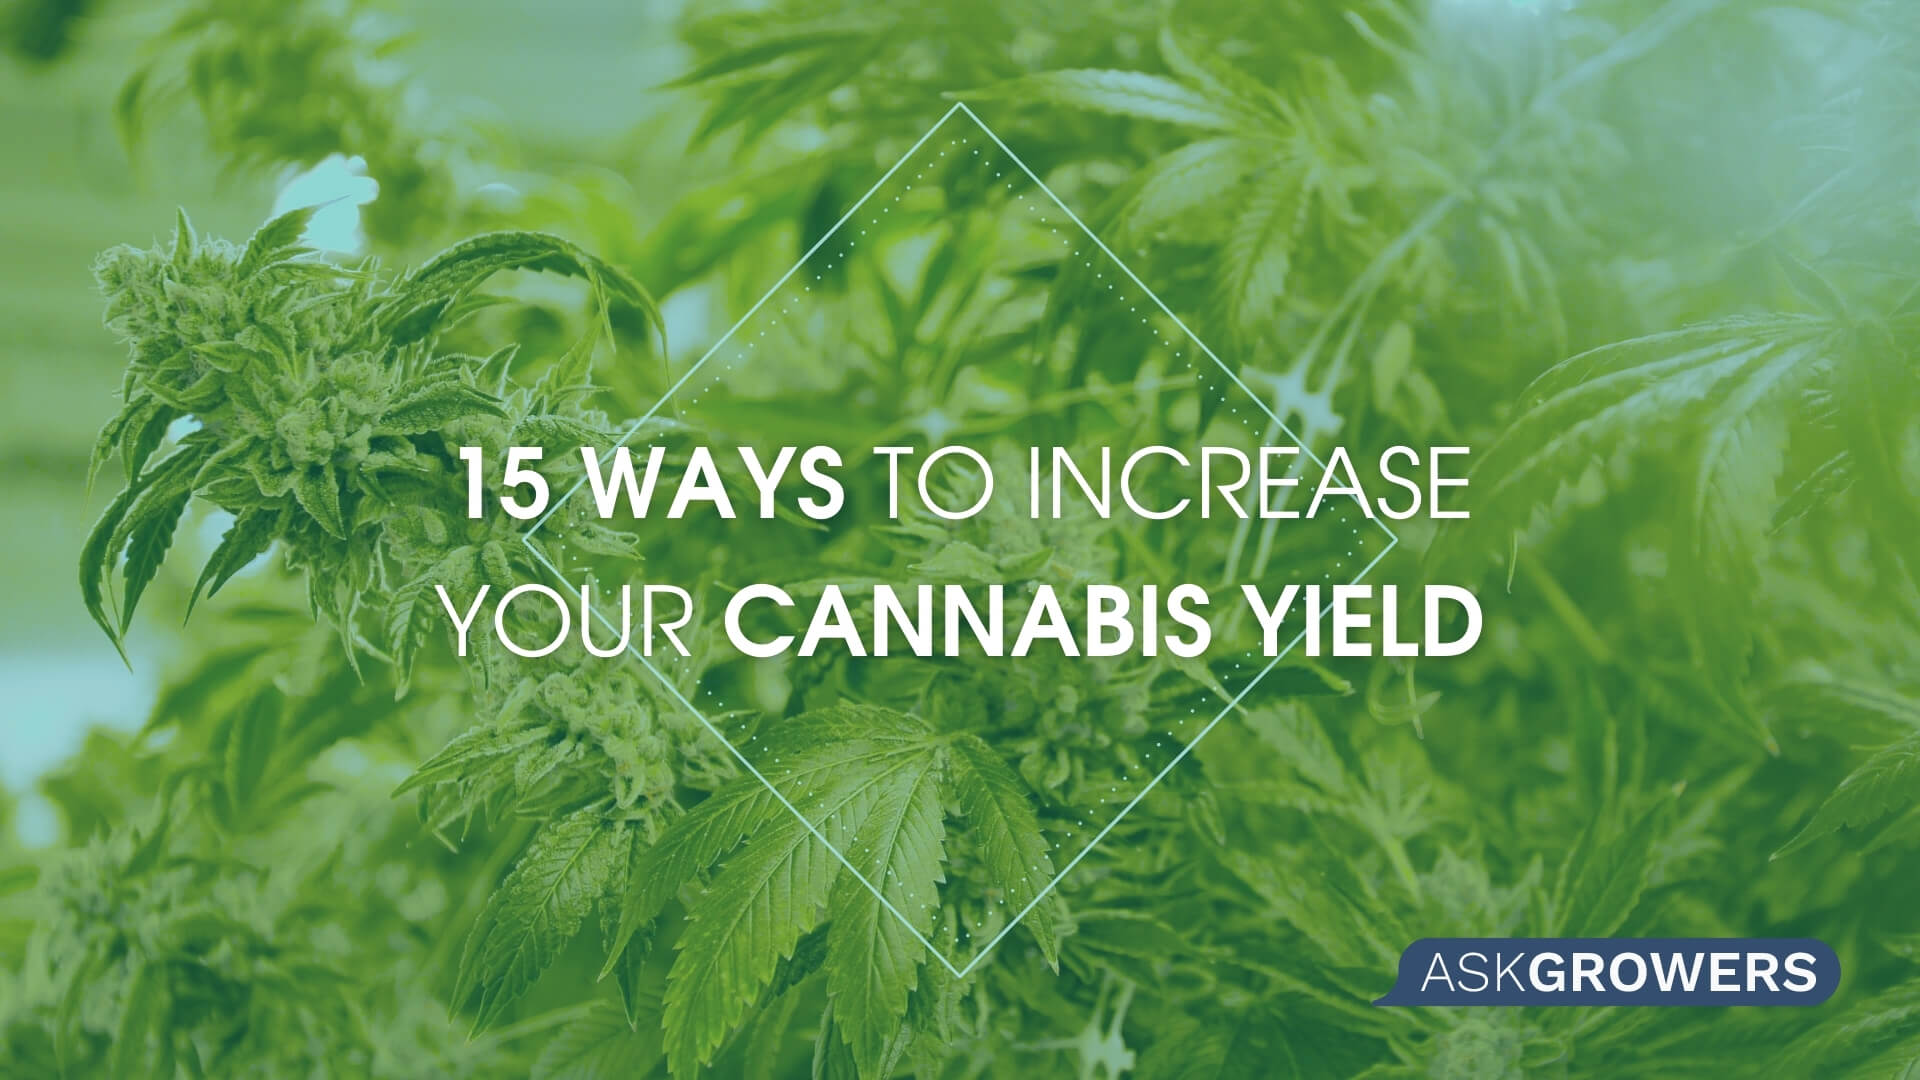 15 Ways to Increase Cannabis Yield